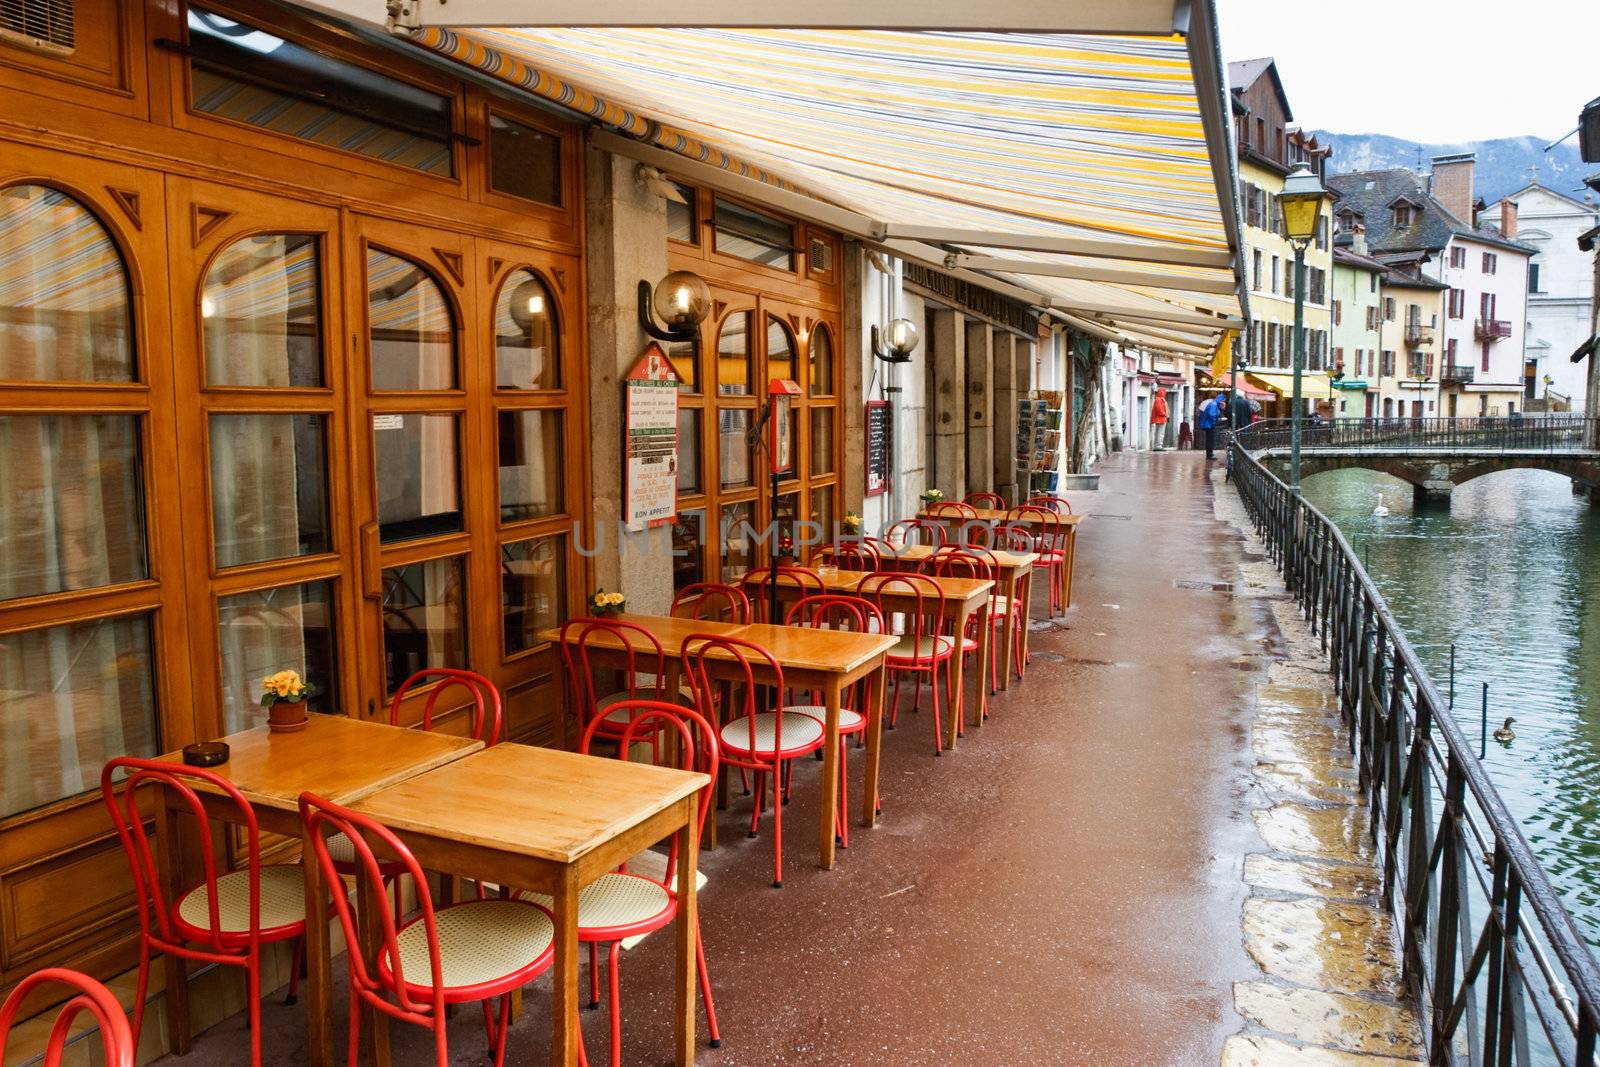 Empty street cafe on a rainy day